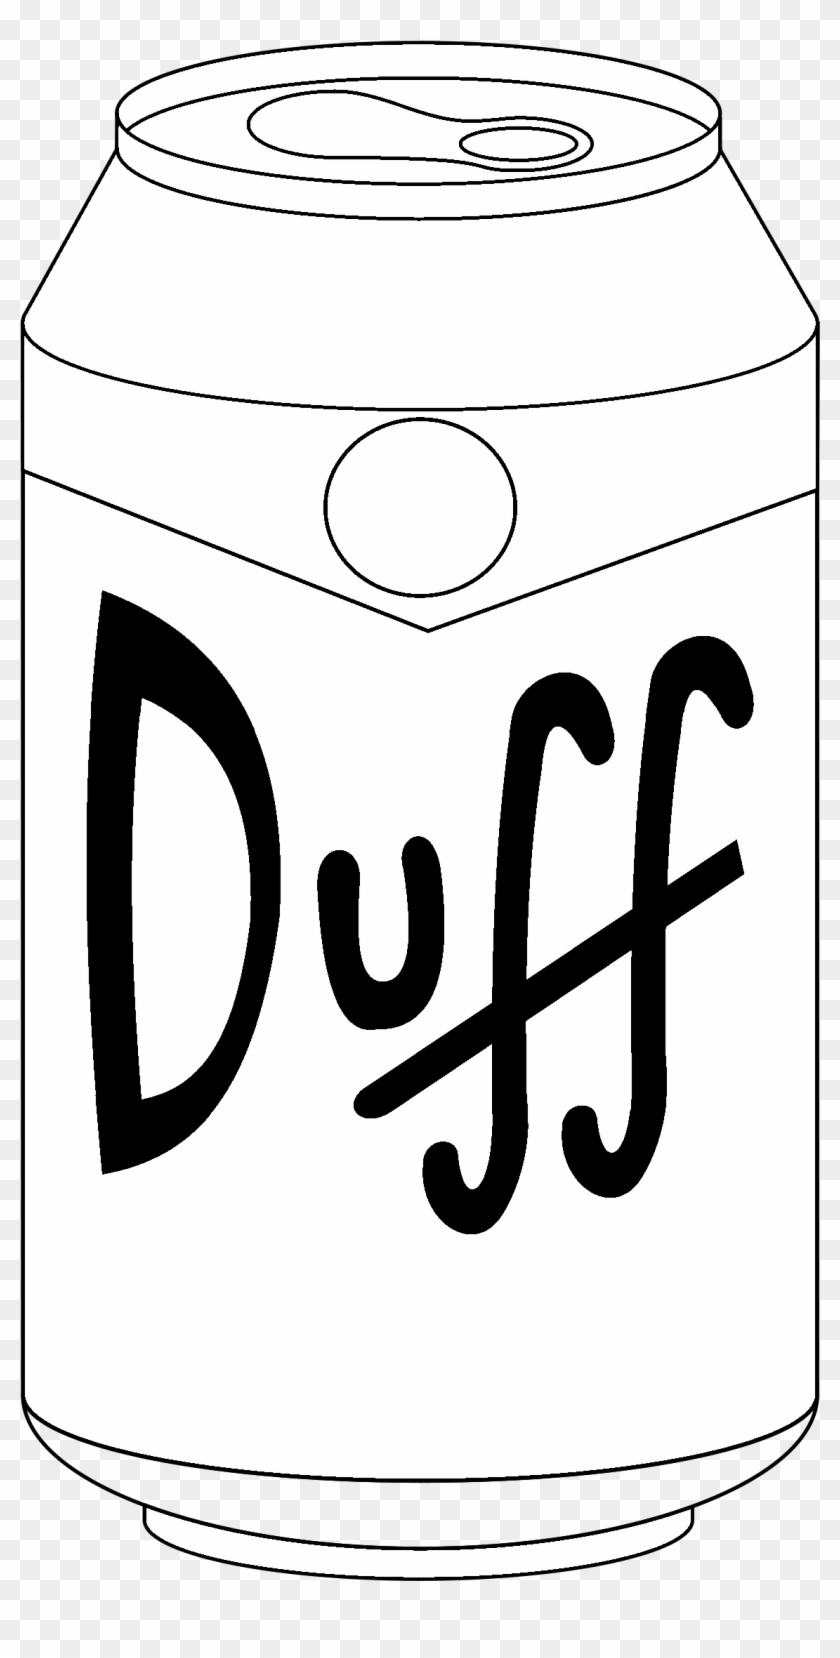 Duff Beer Logo Black And White - Duff Beer #444568